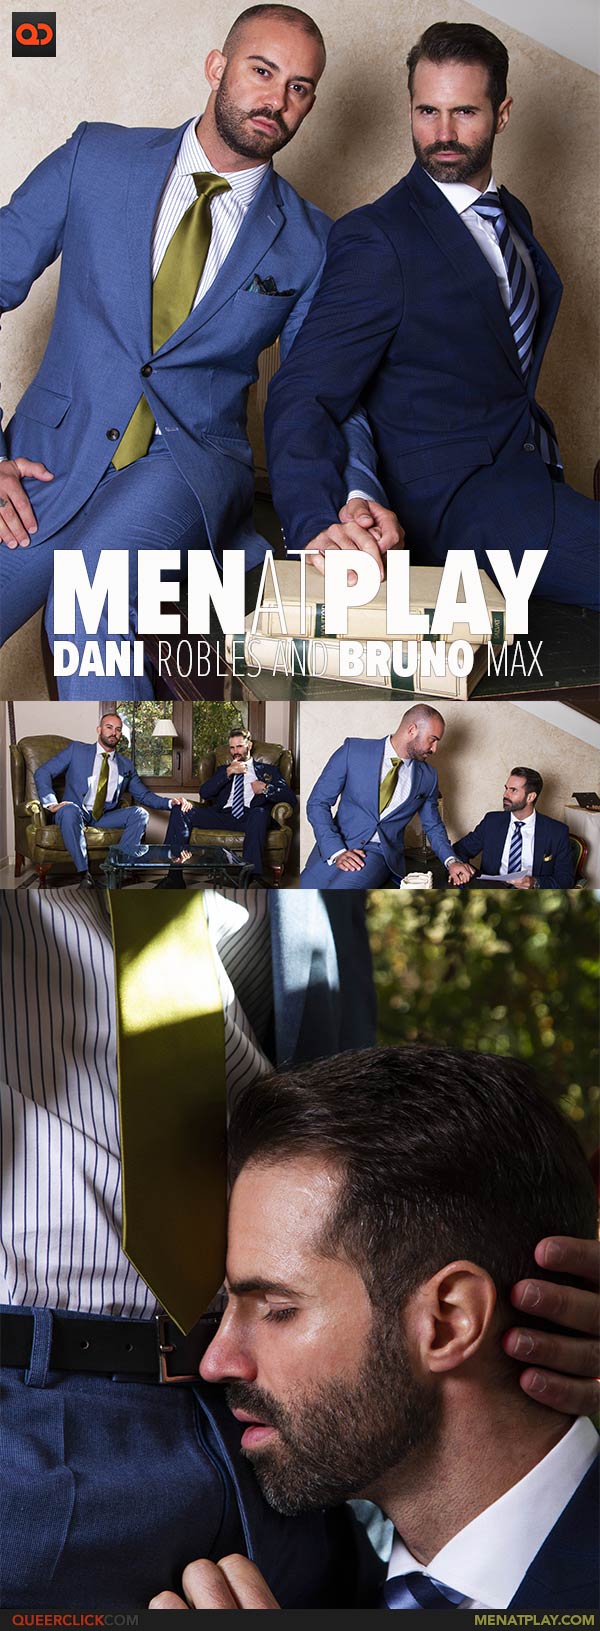 Men at Play: Dani Robles and Bruno Max